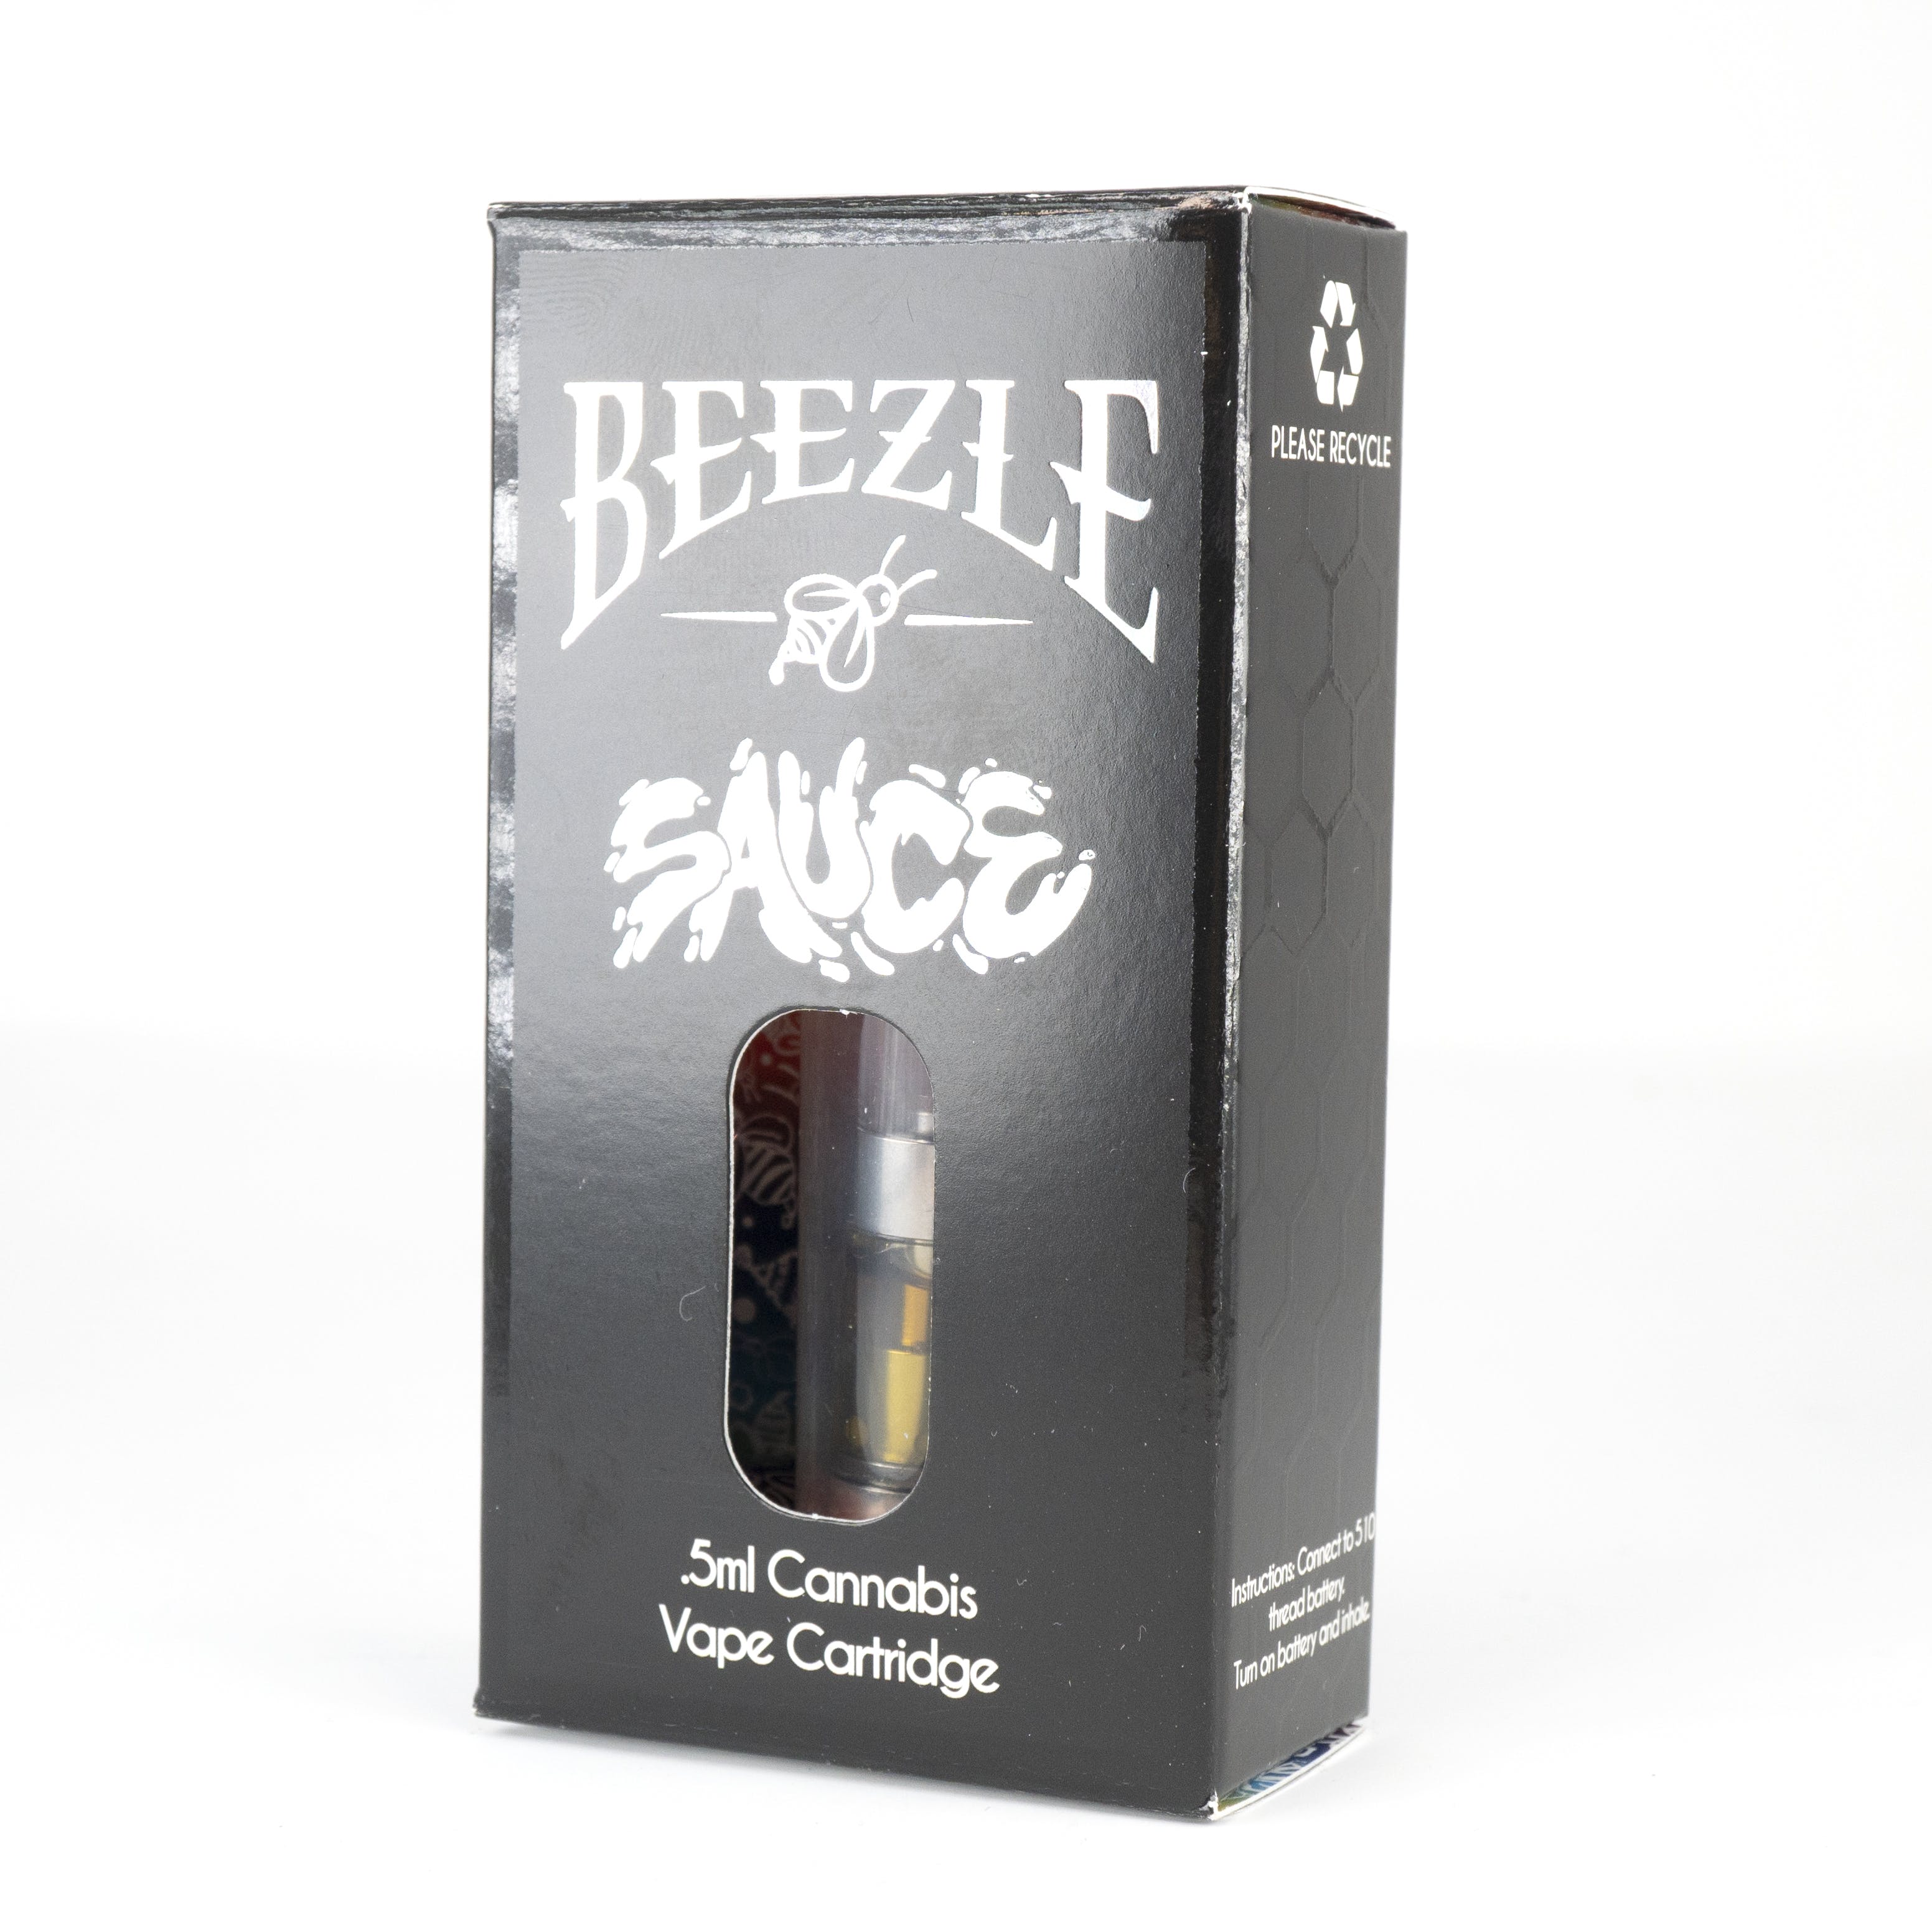 Beezle Extracts: Grimace OG Cartridge